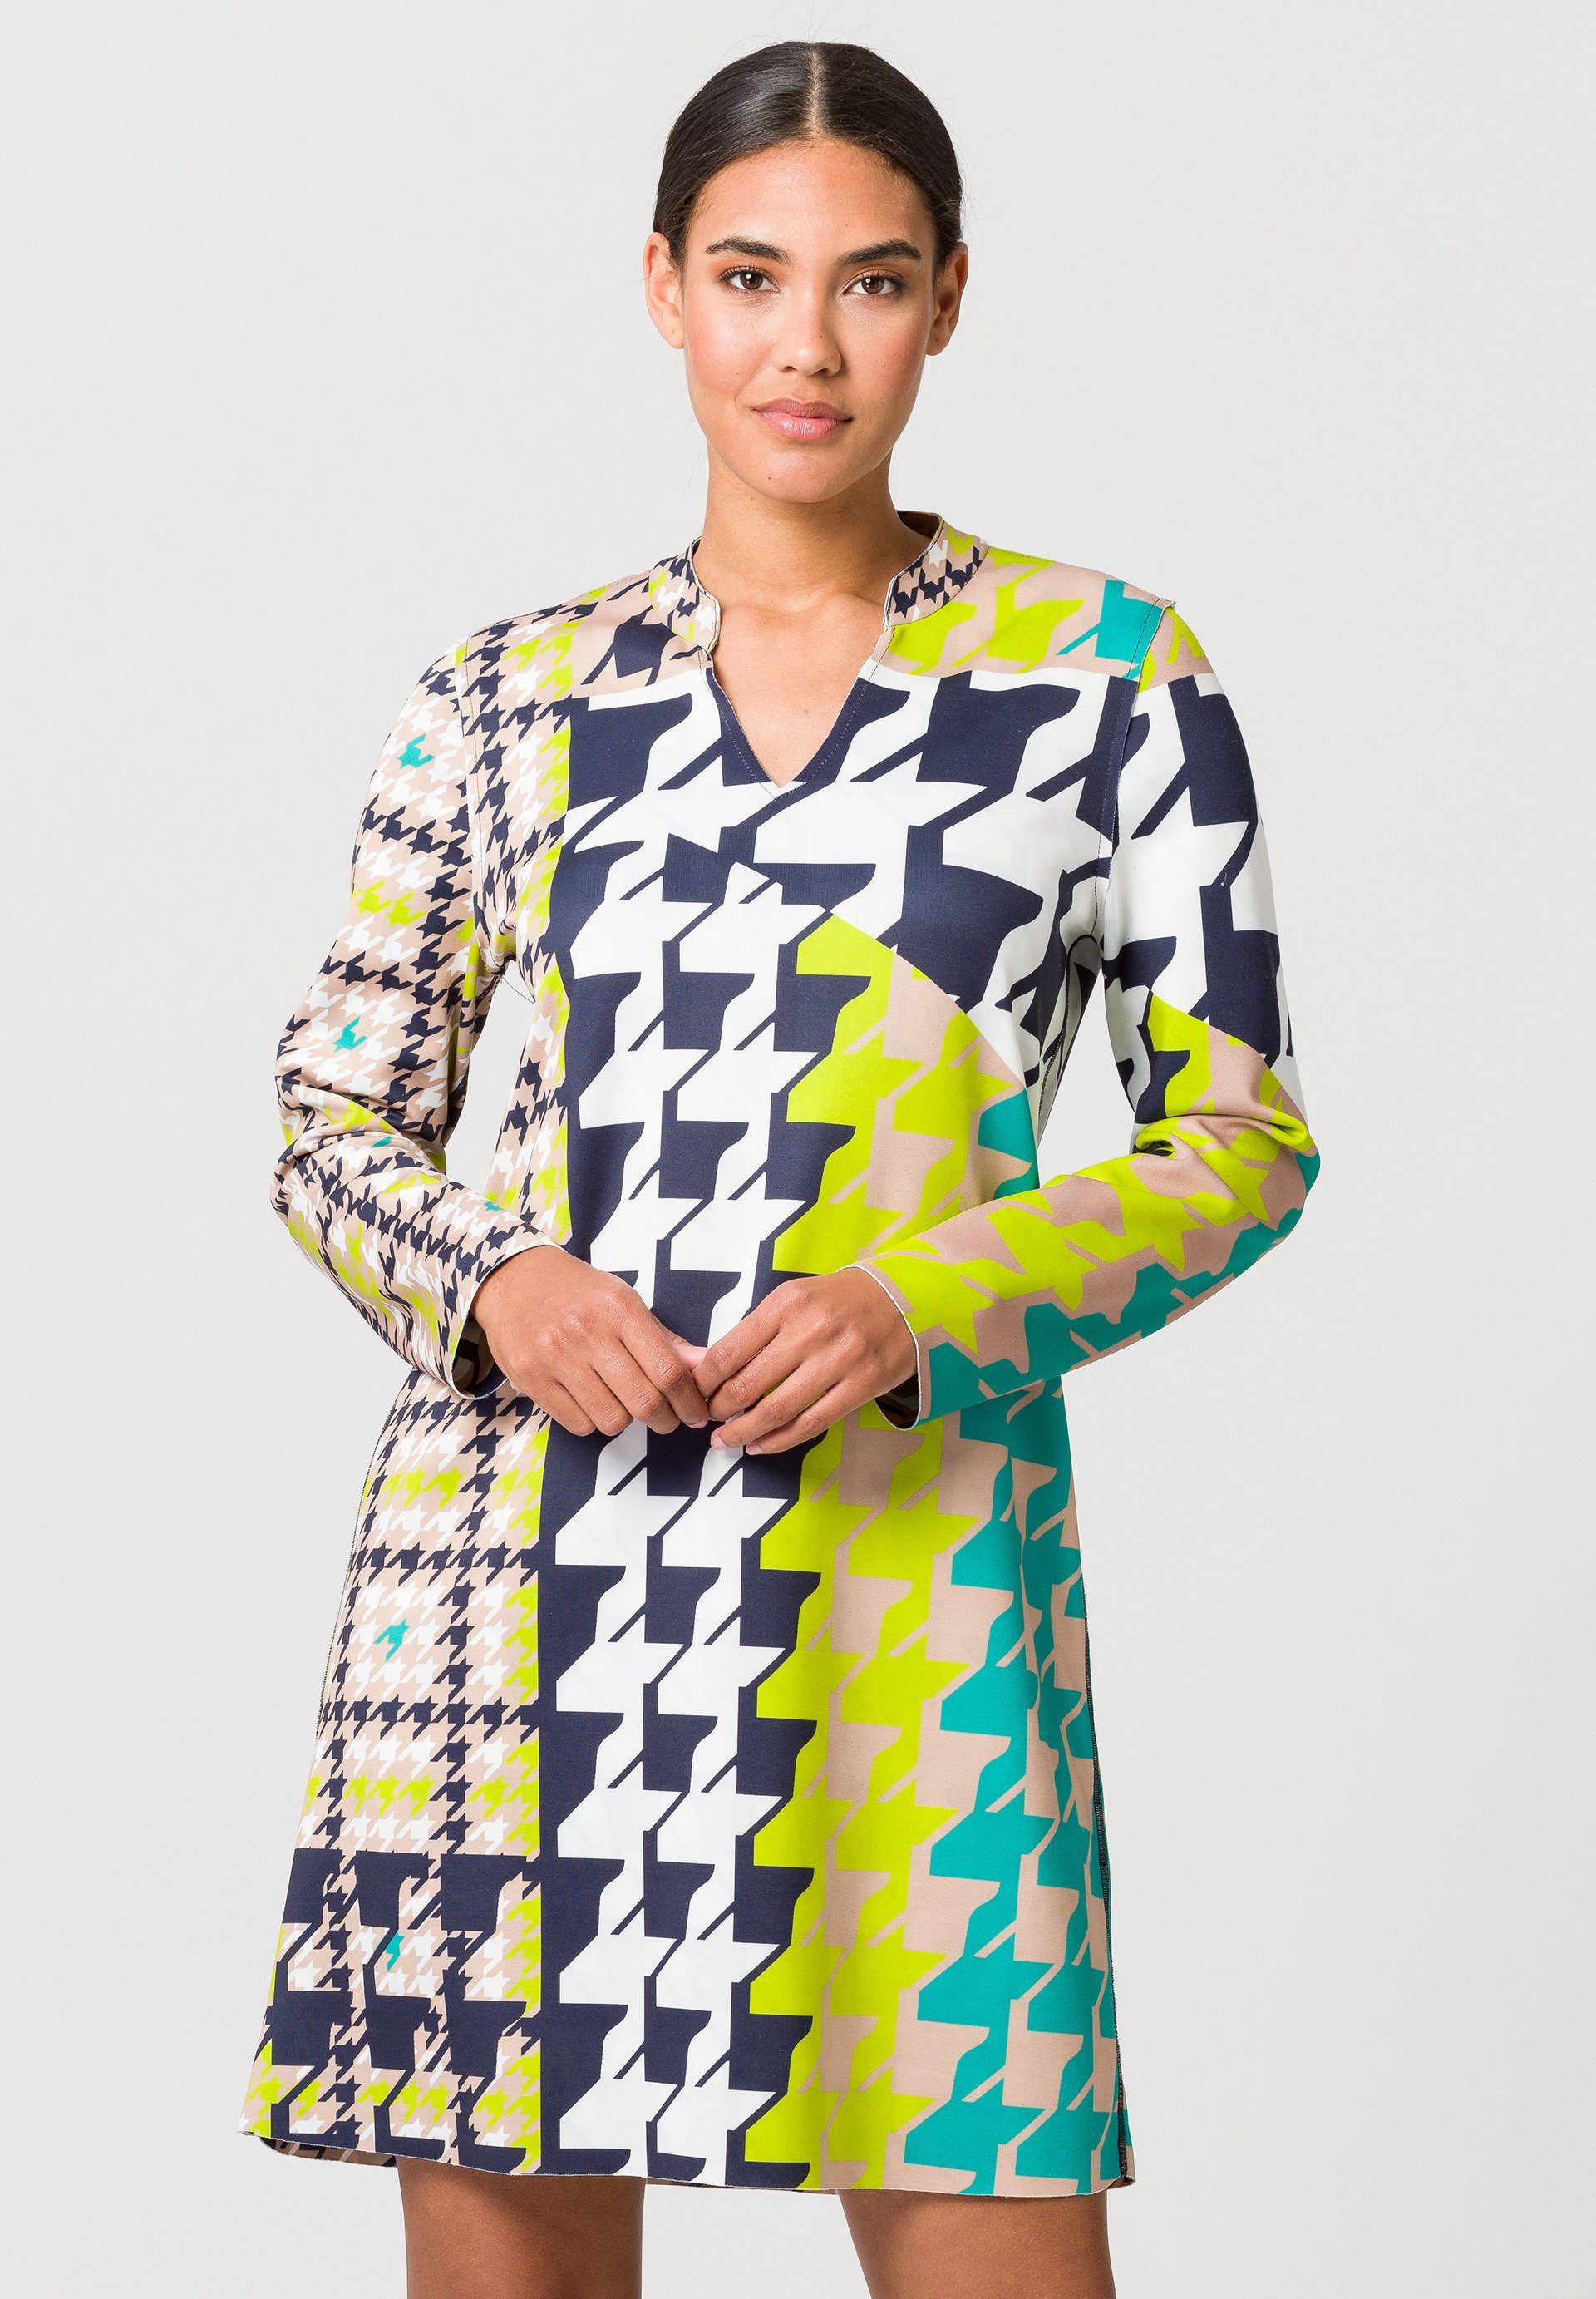 TUZZI Jerseykleid als Wendekleid mit Alloverprint, Alloverprint in  verschiedenen Designs